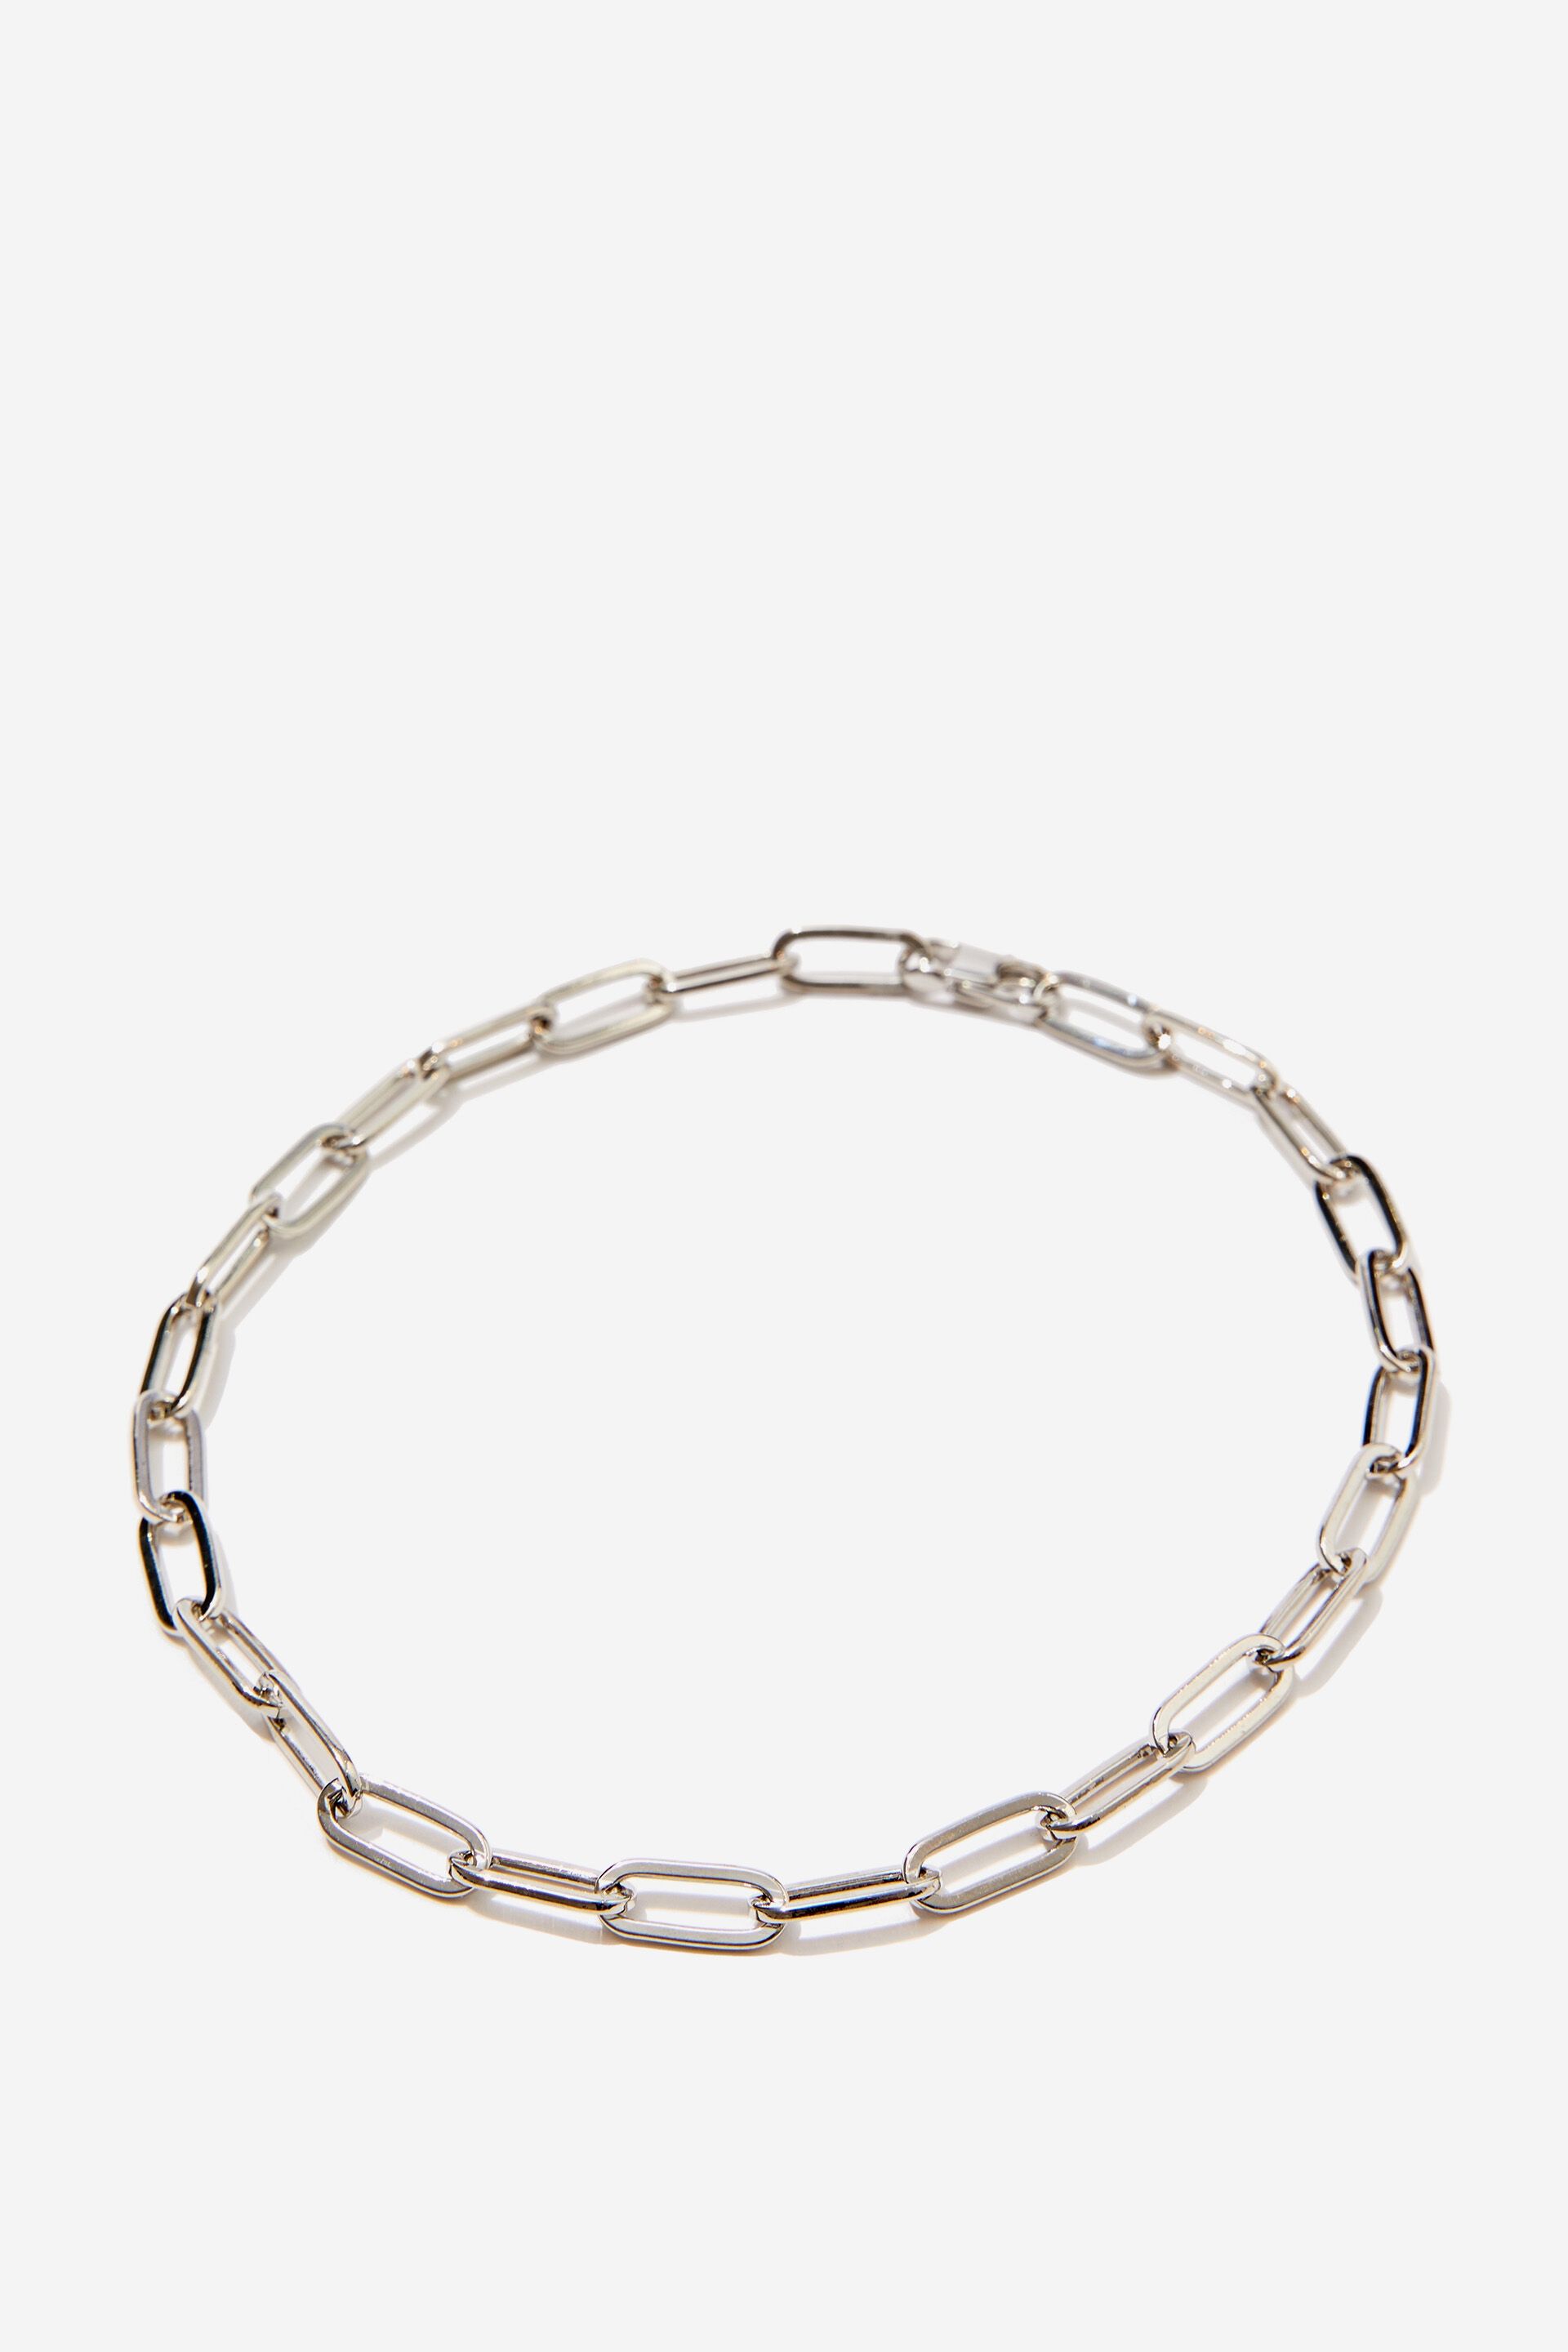 Two-Tone Keller Large Link Necklace - Josephs Jewelers